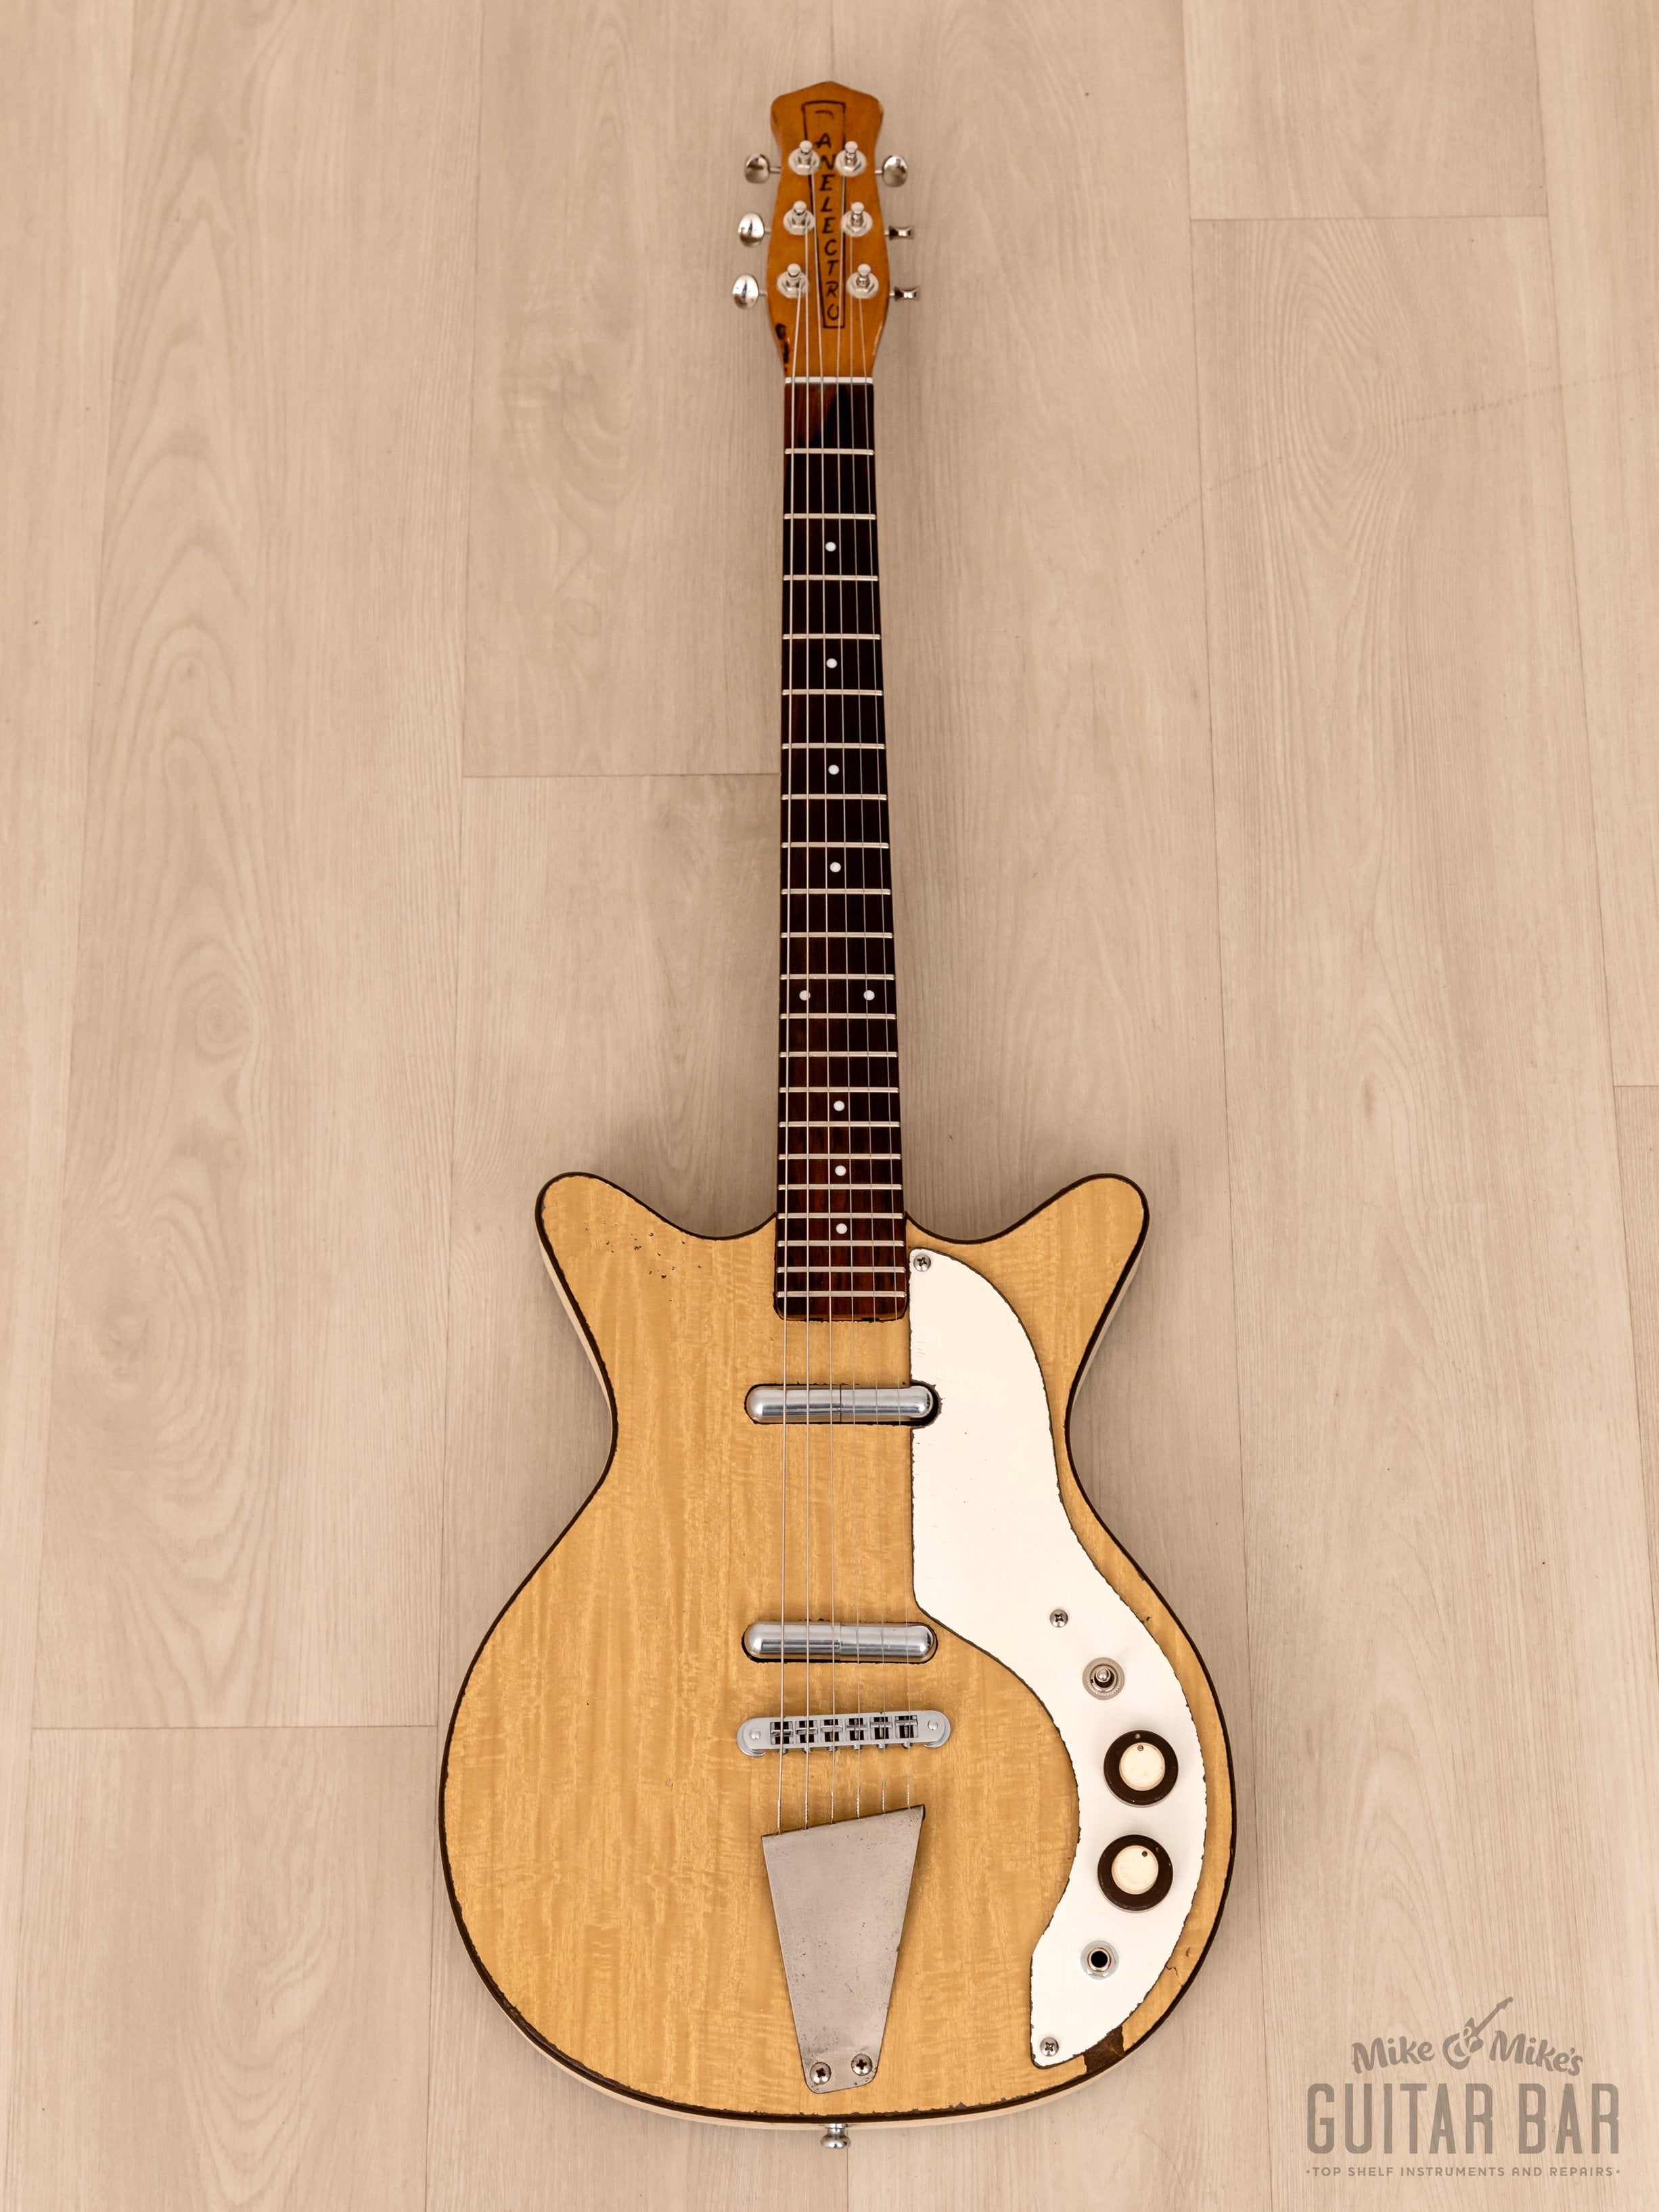 1959 Danelectro Companion 5025 Vintage Guitar Blonde, DC-2 w/ Hardware Upgrades